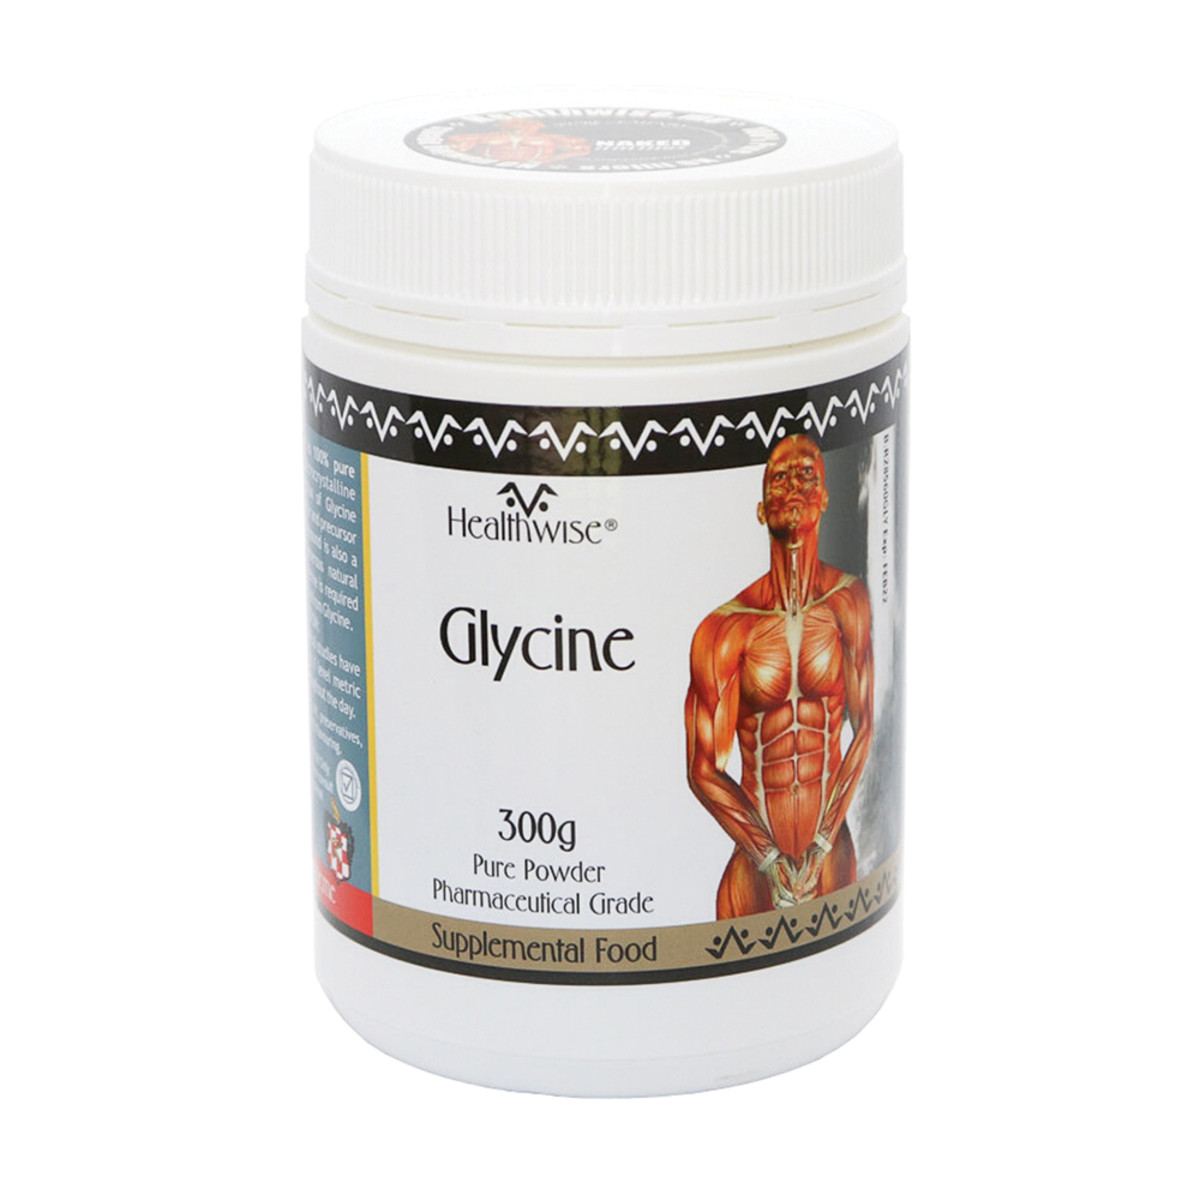 HEALTHWISE - Glycine